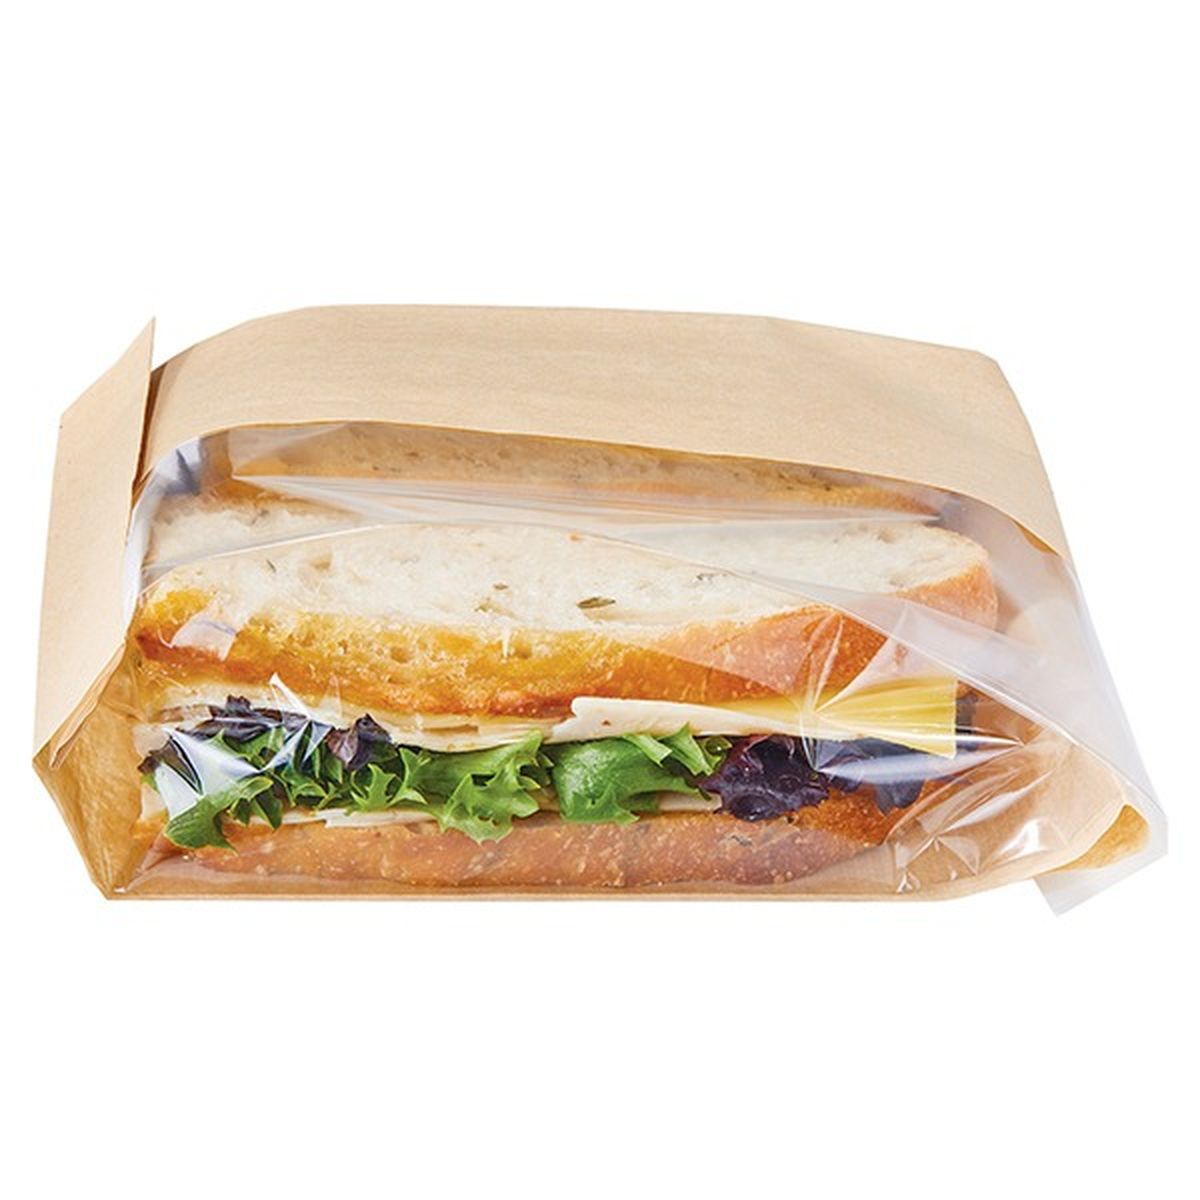 Calories in Wegmans All Organic Turkey Sandwich